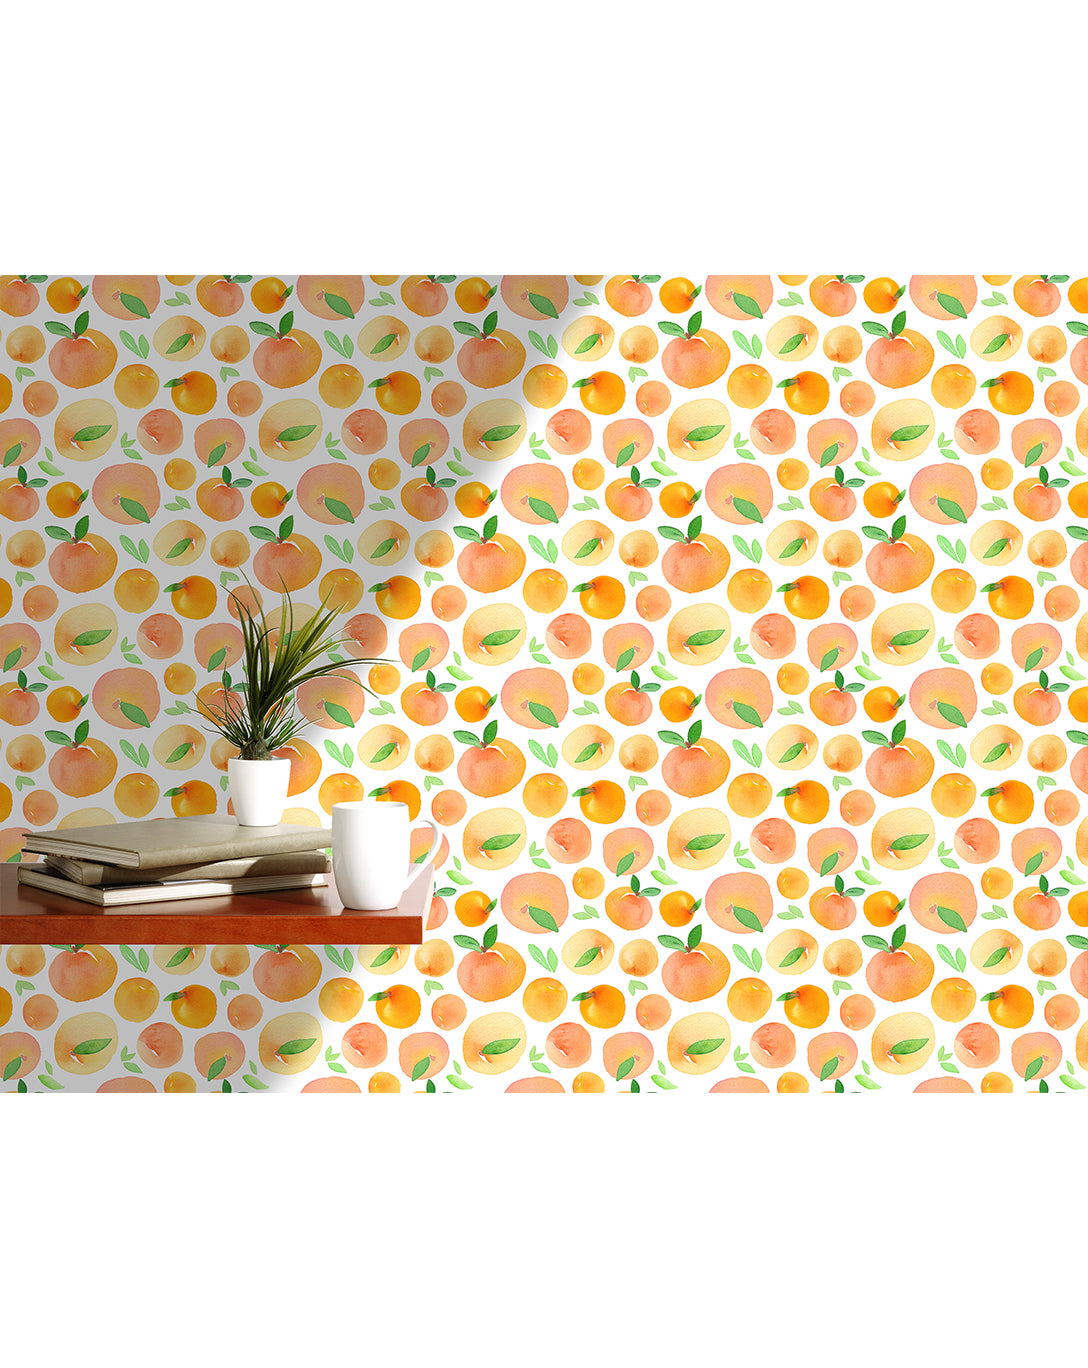 Orange Wallpaper Fresh Watercolor Wallpaper Self Adhesive Removable Wallpaper for kitchen Fruit Wallpaper Floral Wallpaper CC075